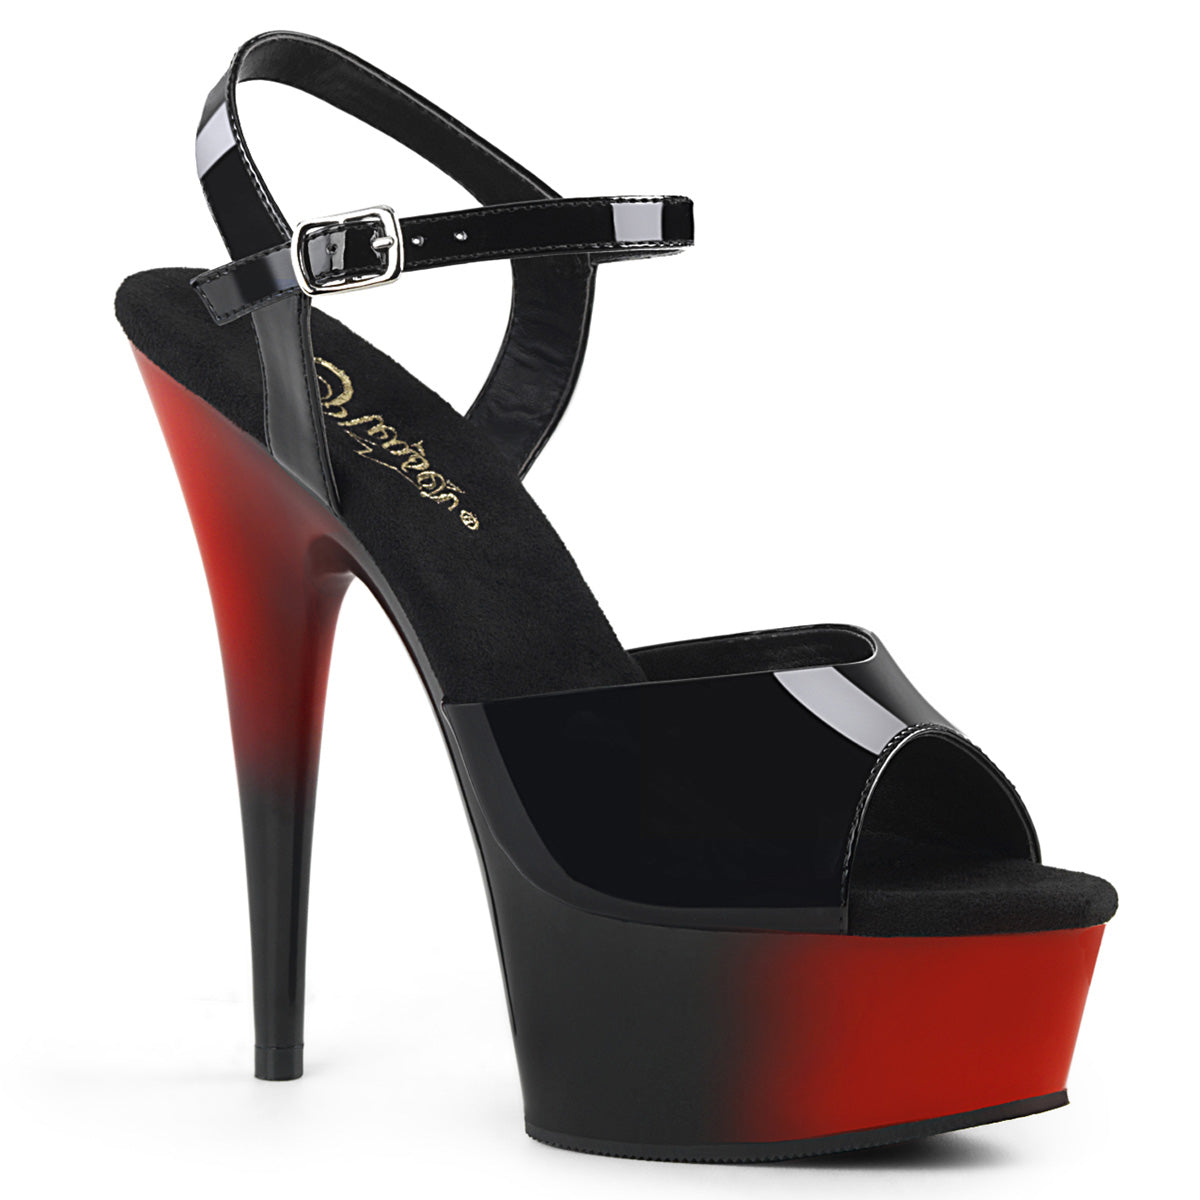 DELIGHT-609BR Red & Black Ankle Peep Toe High Heel